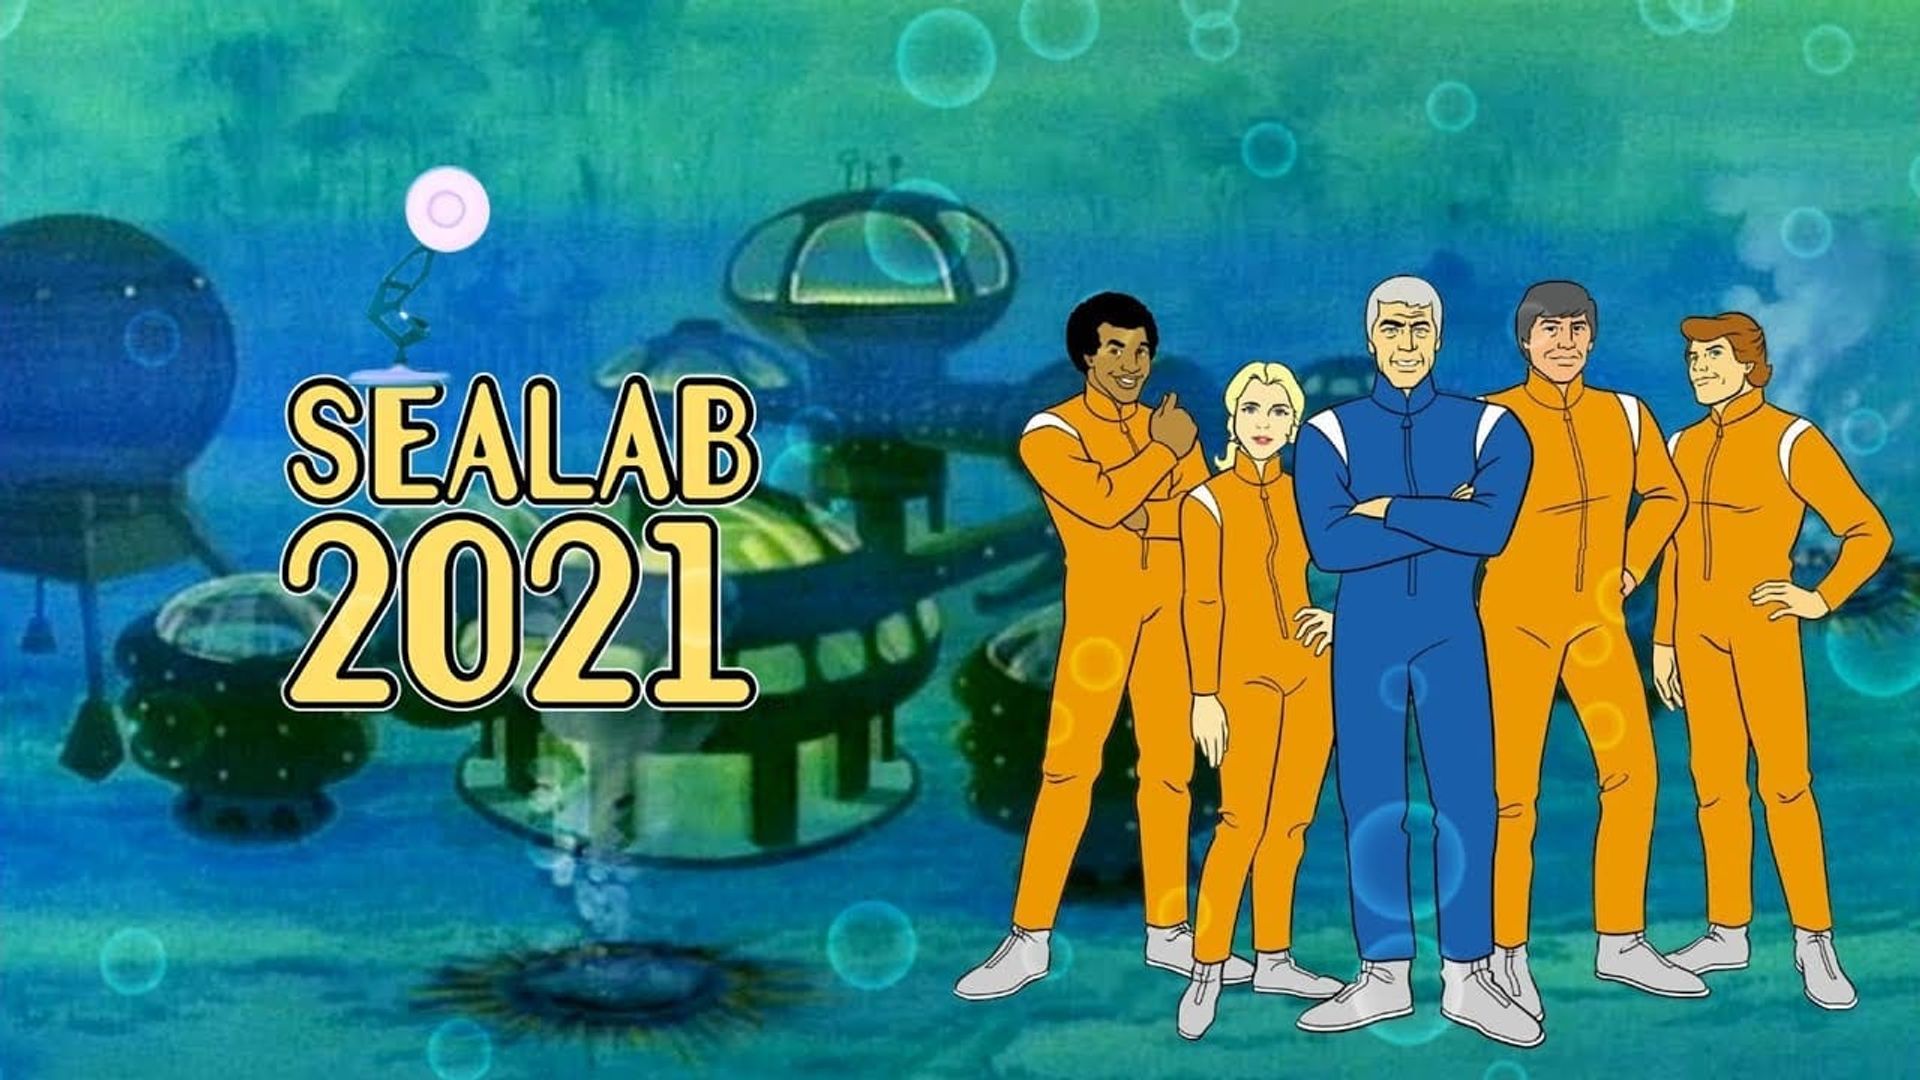 Sealab 2021 background